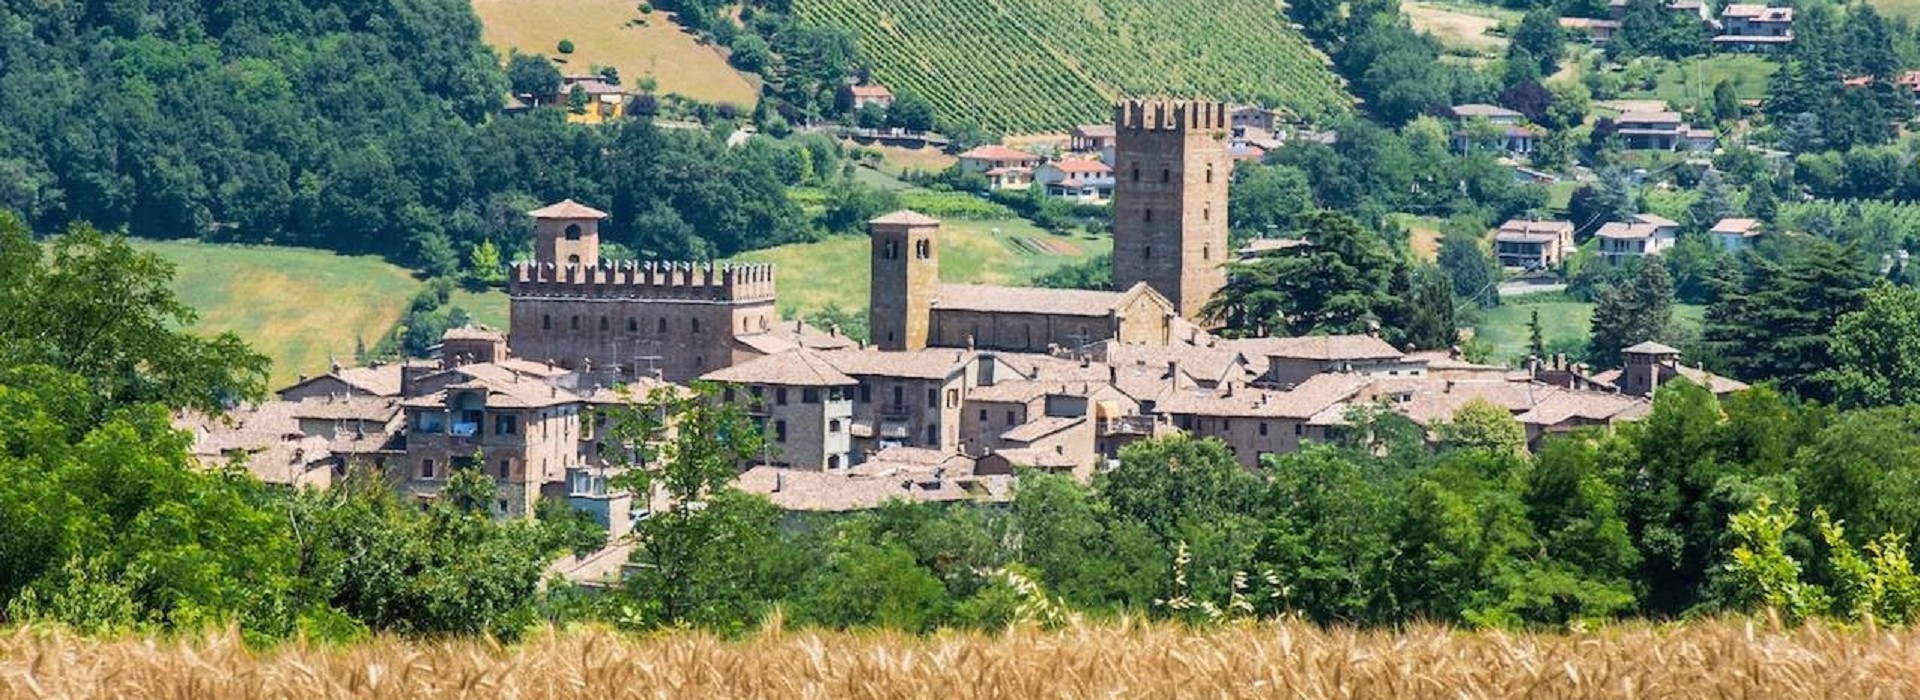 Castles of Piacenza